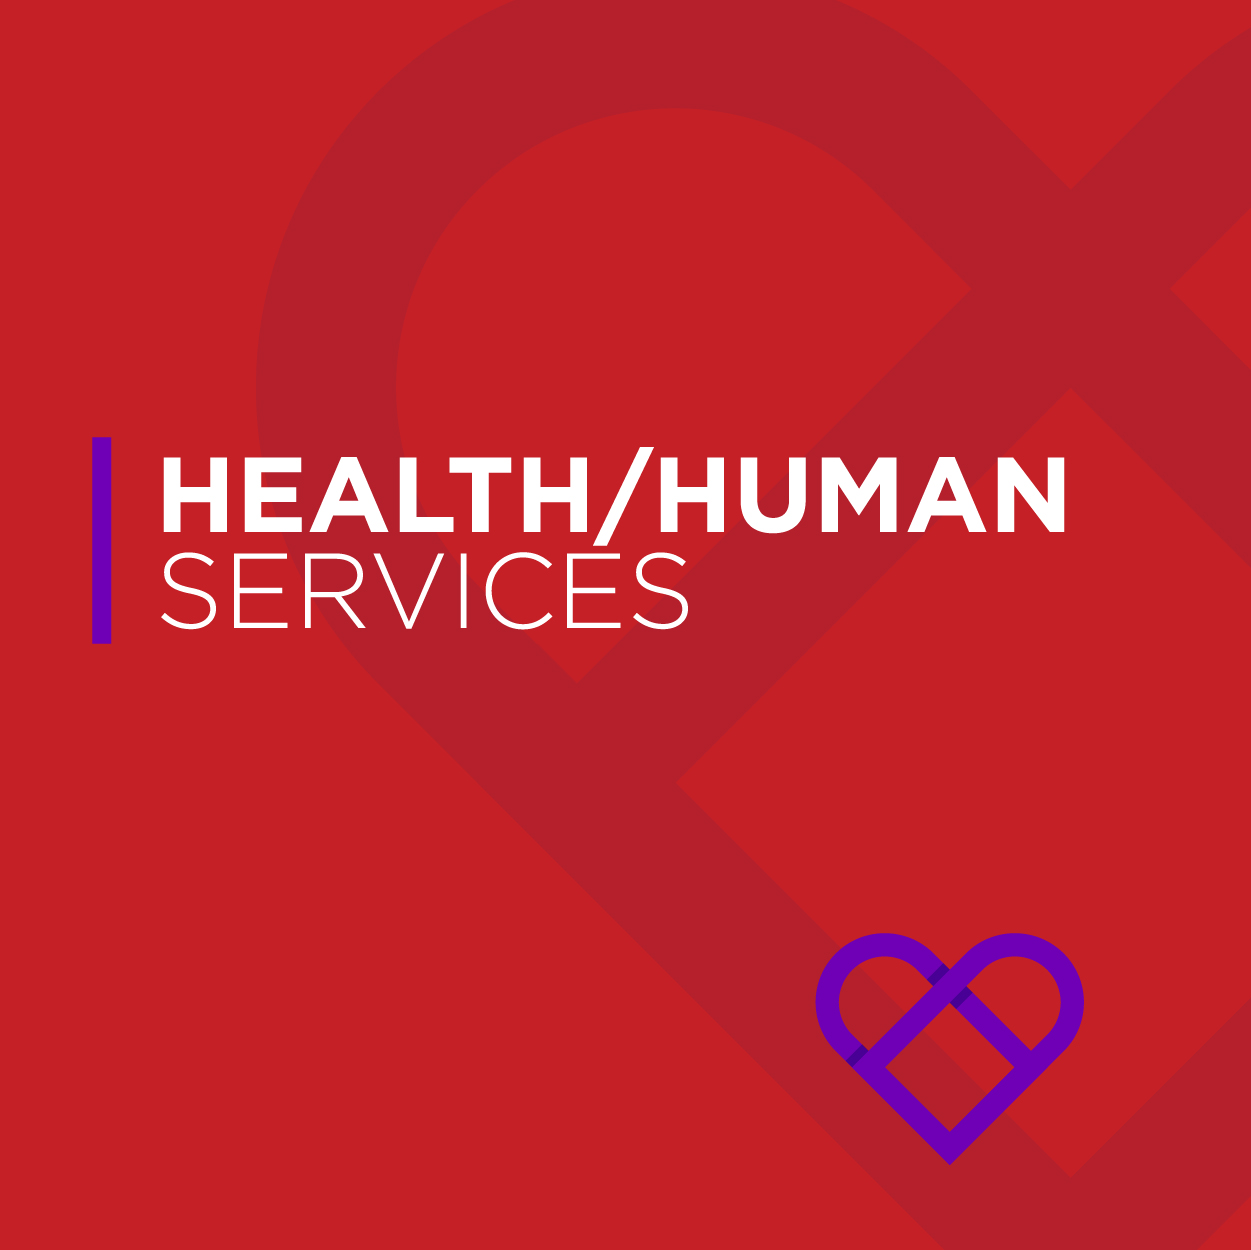 Health/Human Services